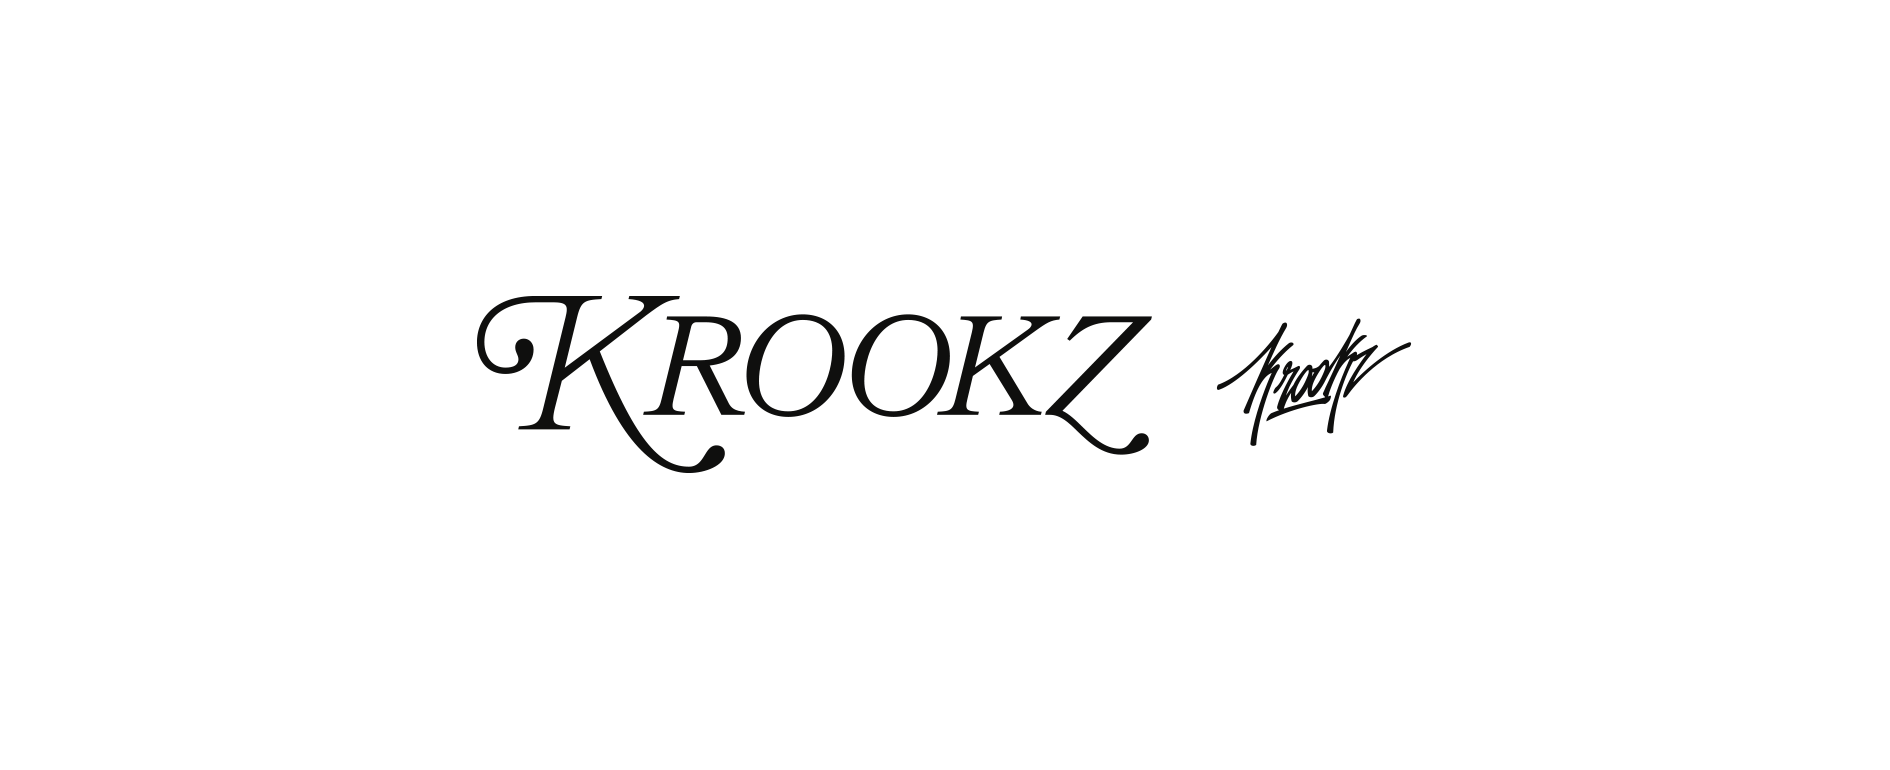 The Krookz Company